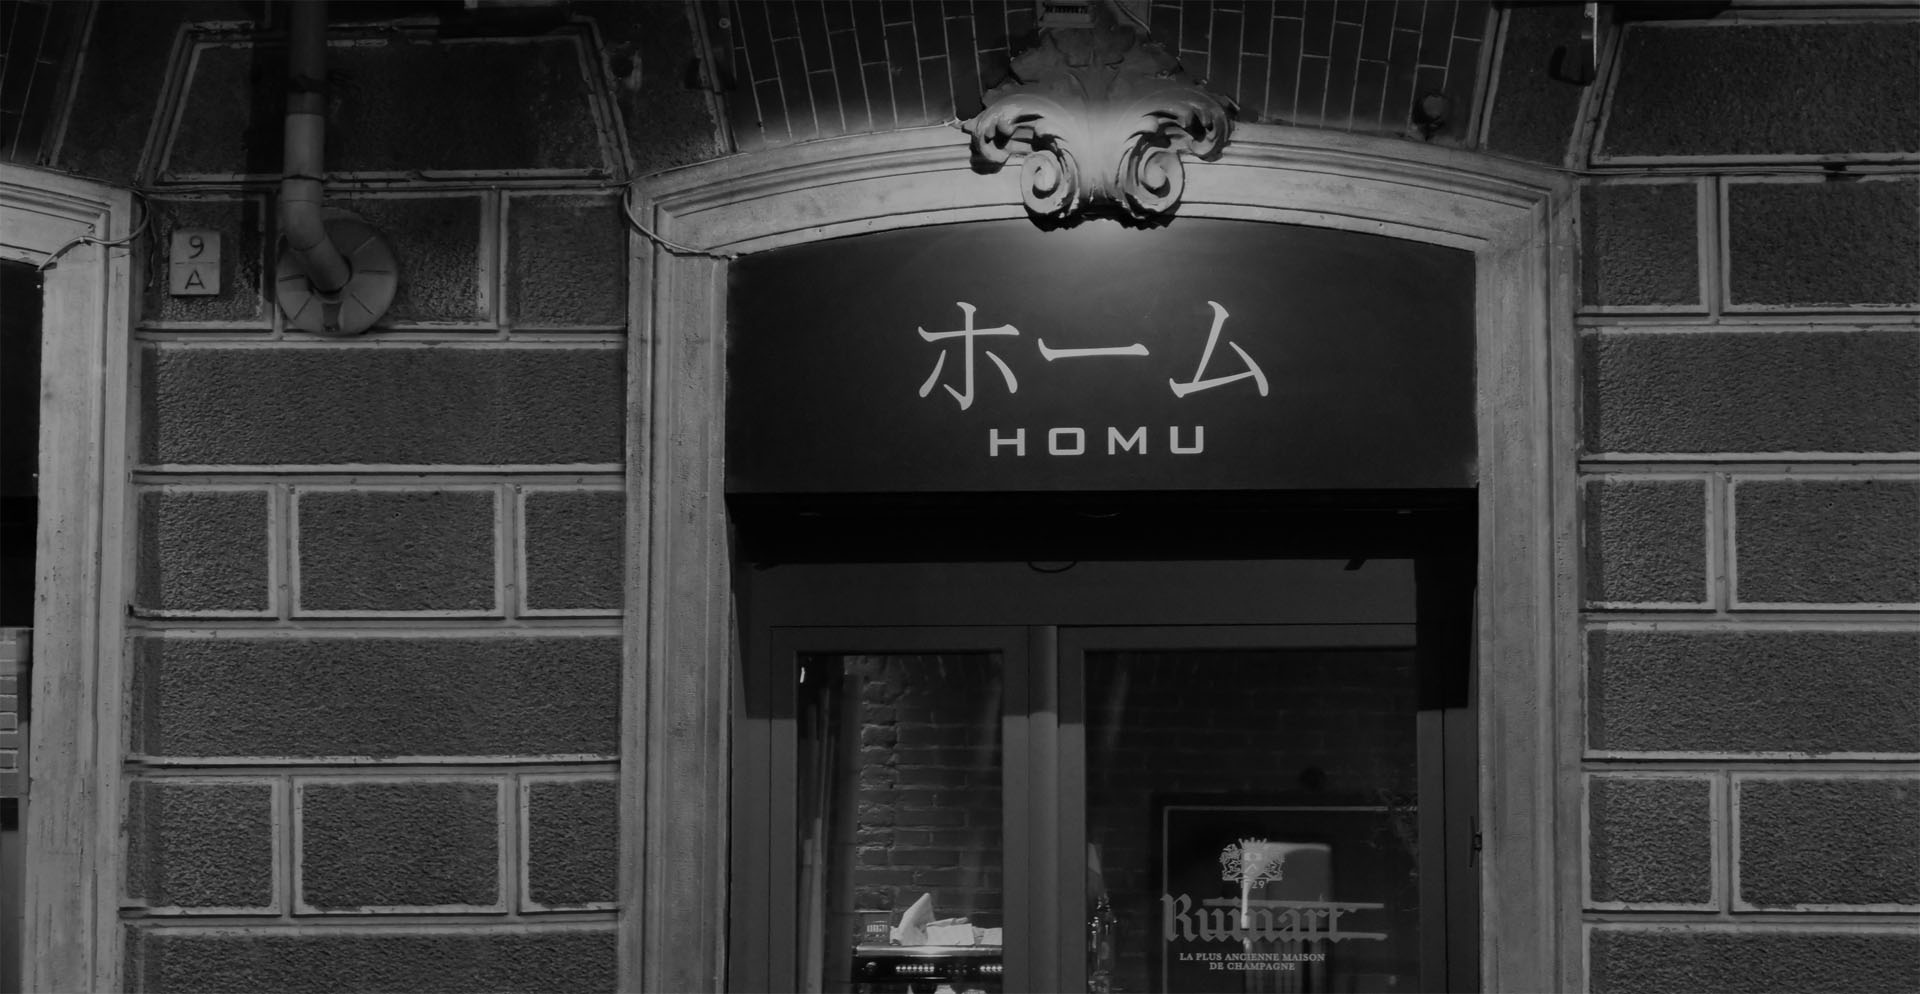 homu_ristorante_ingresso